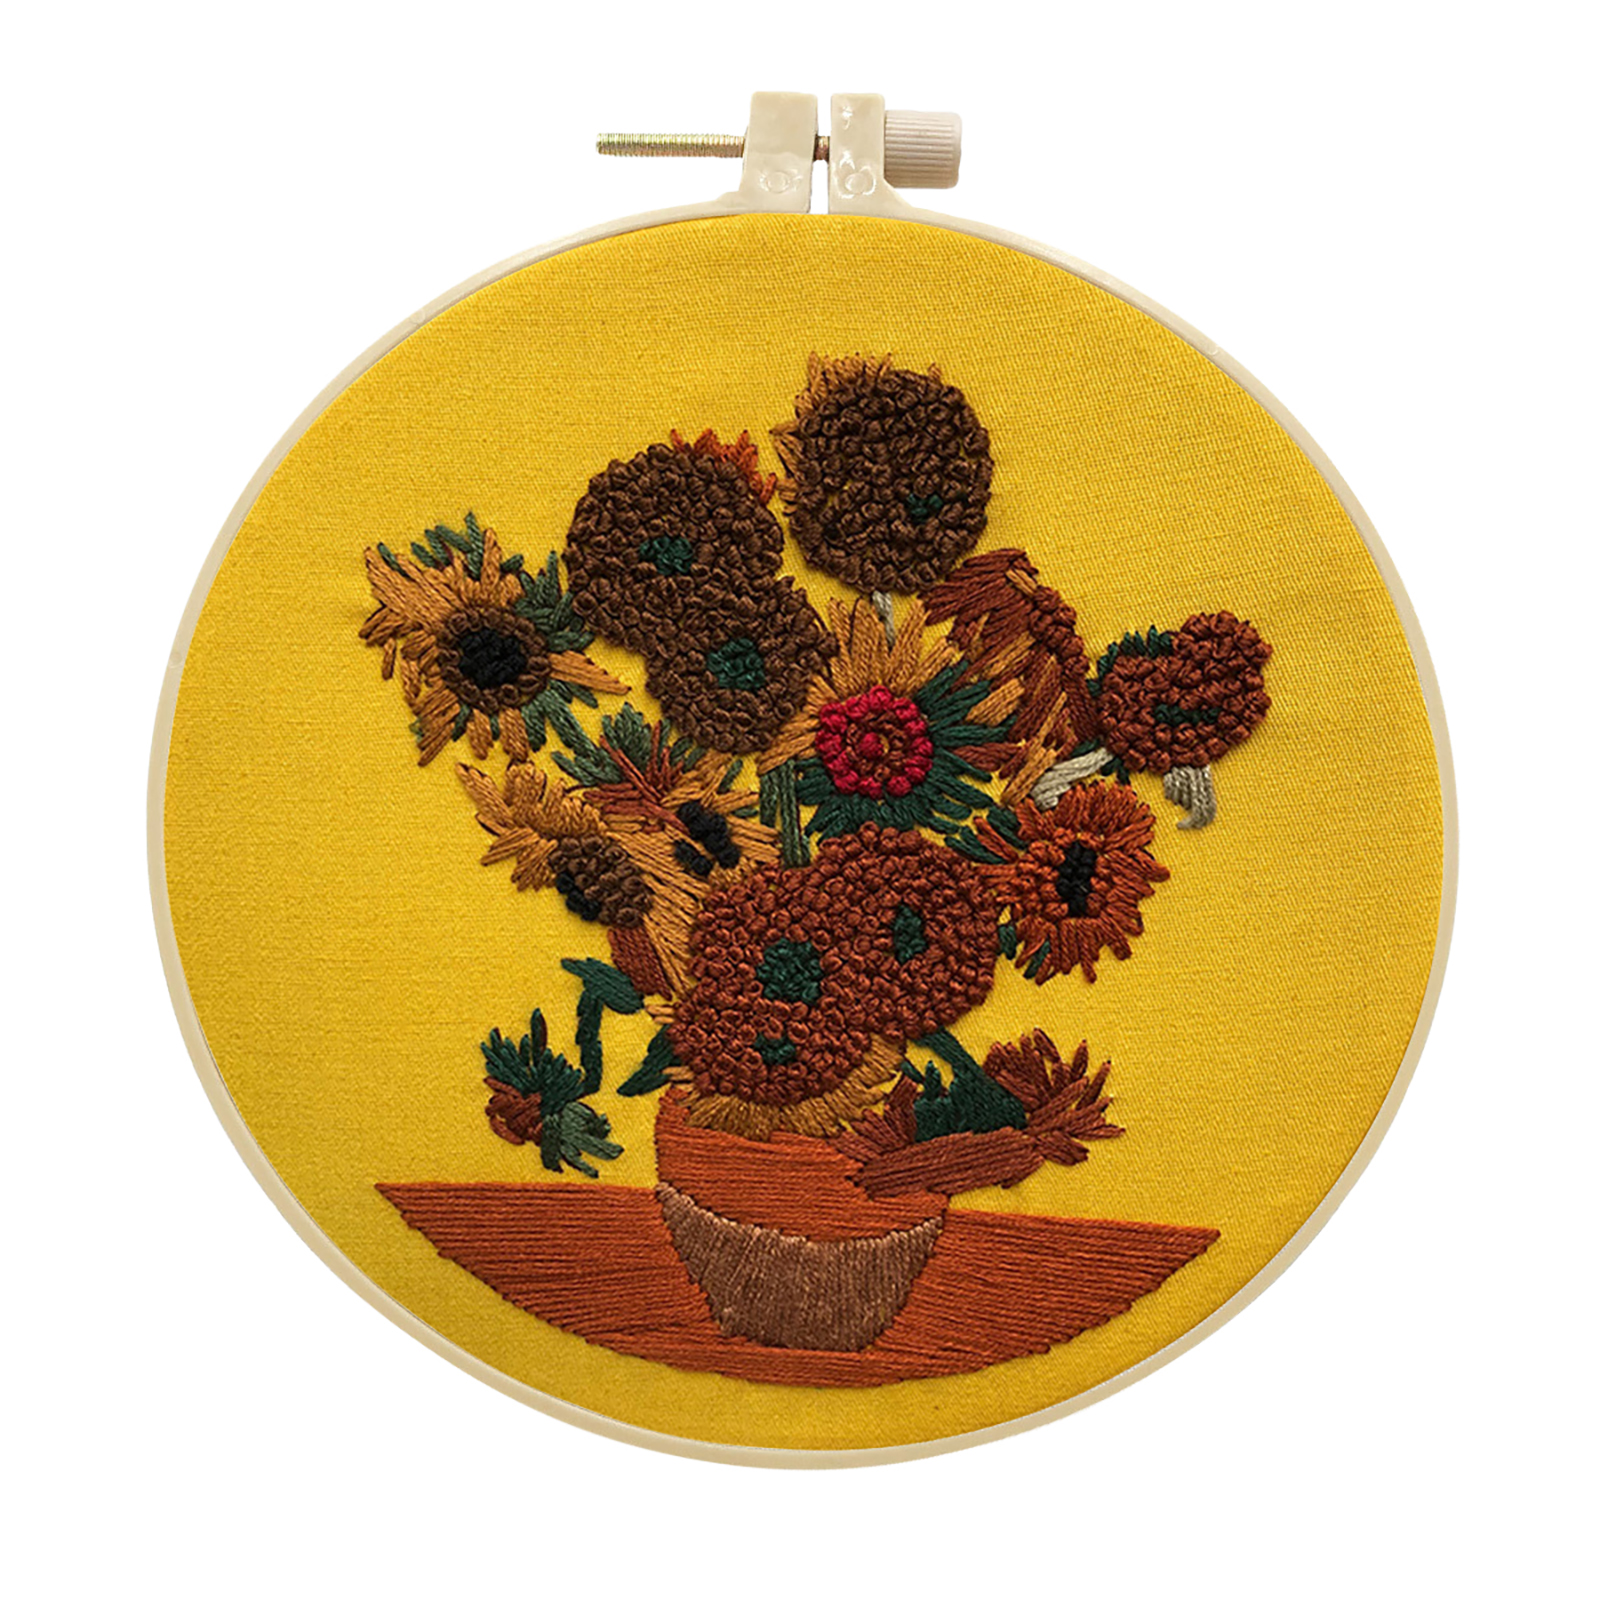 Handmade Embroidery Kit Cross stitch kit for Adult Beginner - Van Gogh Sunflower Pattern